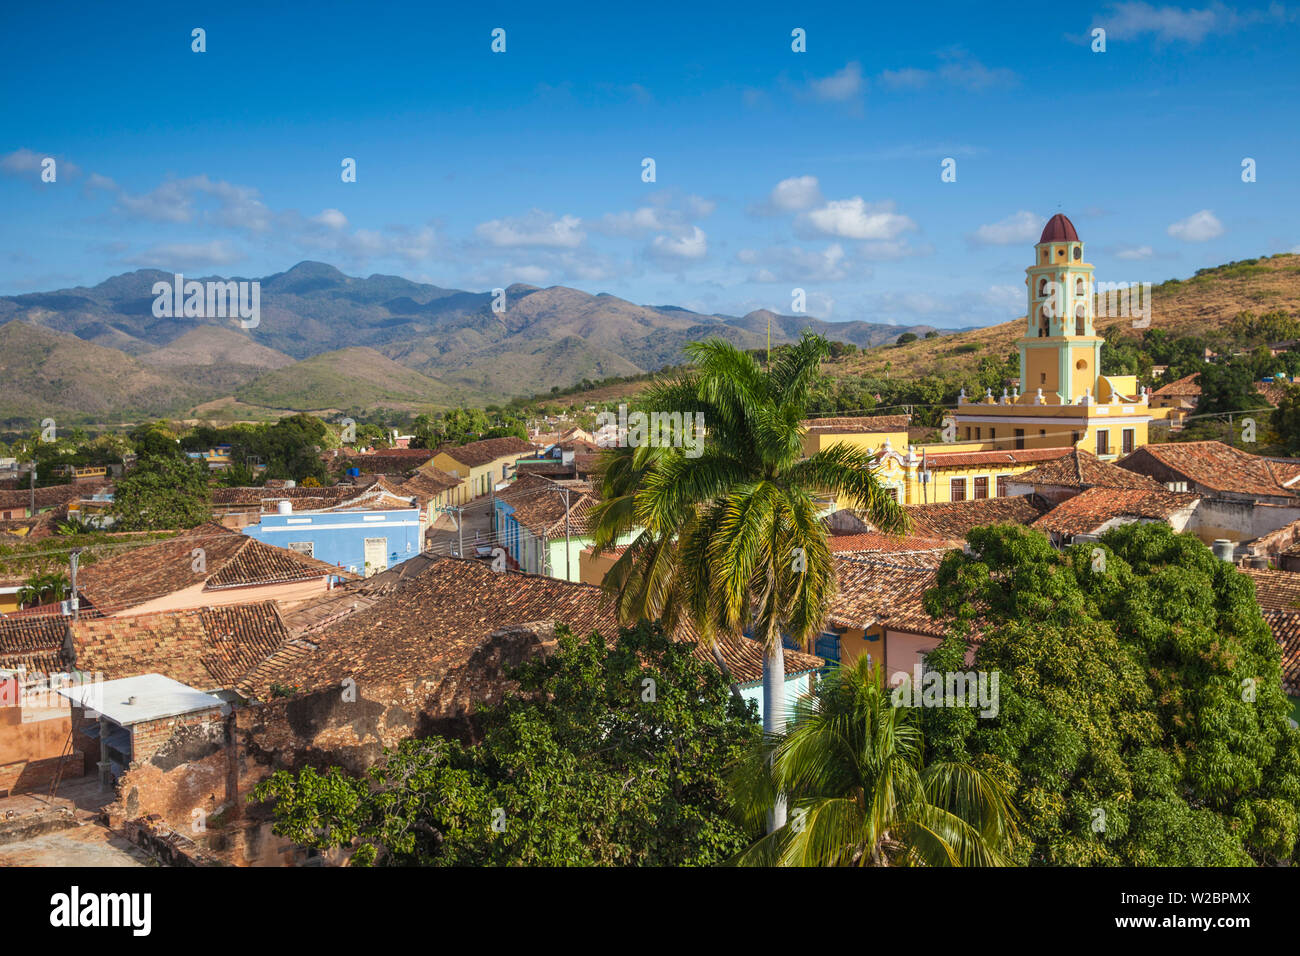 Cuba, Trinidad, View of Musuem National de la Luncha Contra Bandidos - former convent of San Francisco de AsÃsi Stock Photo